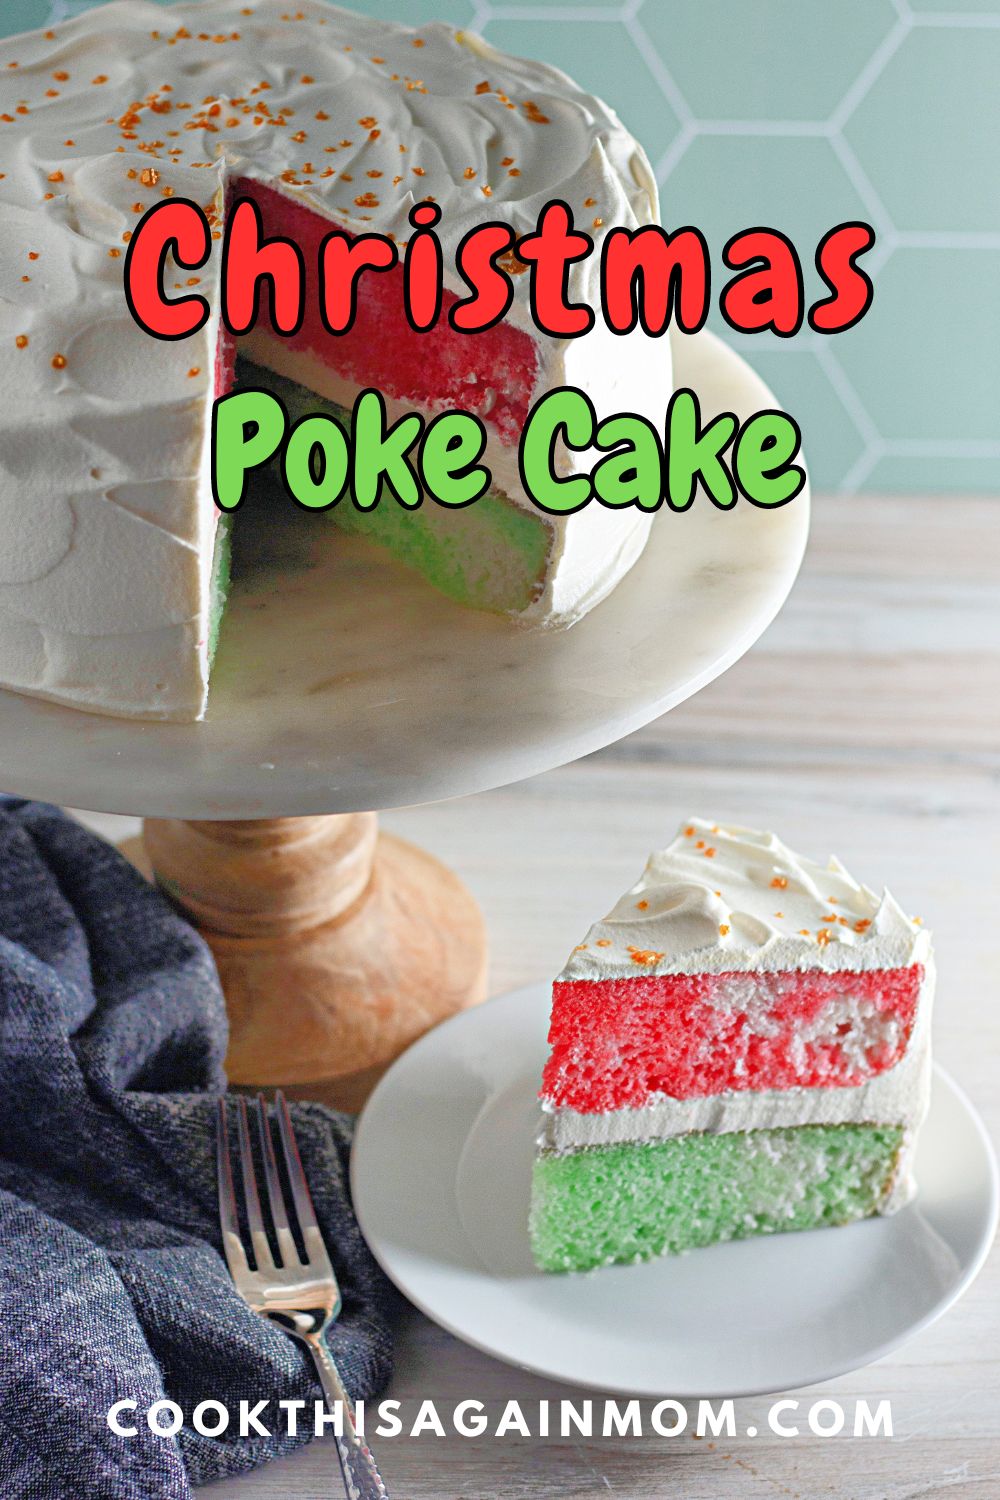 Simple Christmas Poke Cake Recipe - Cook This Again Mom